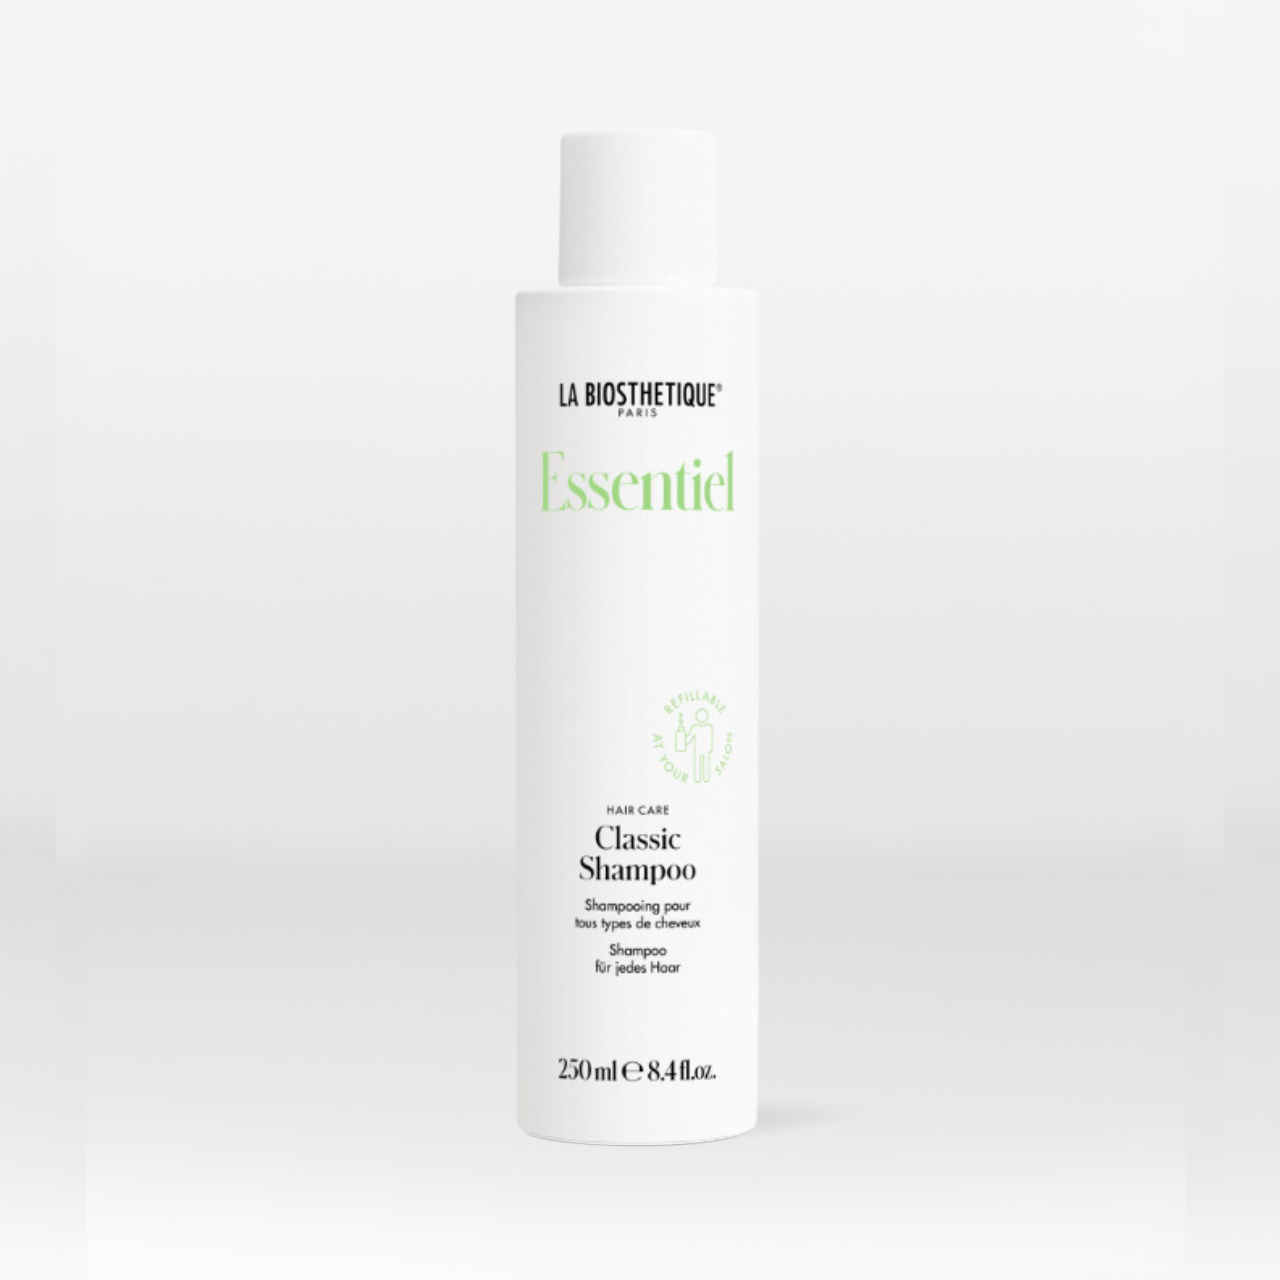 La Biosthetique's Essentiel Classic Shampoo balancing shampoo to restore balance and maintain the hair’s natural beauty.